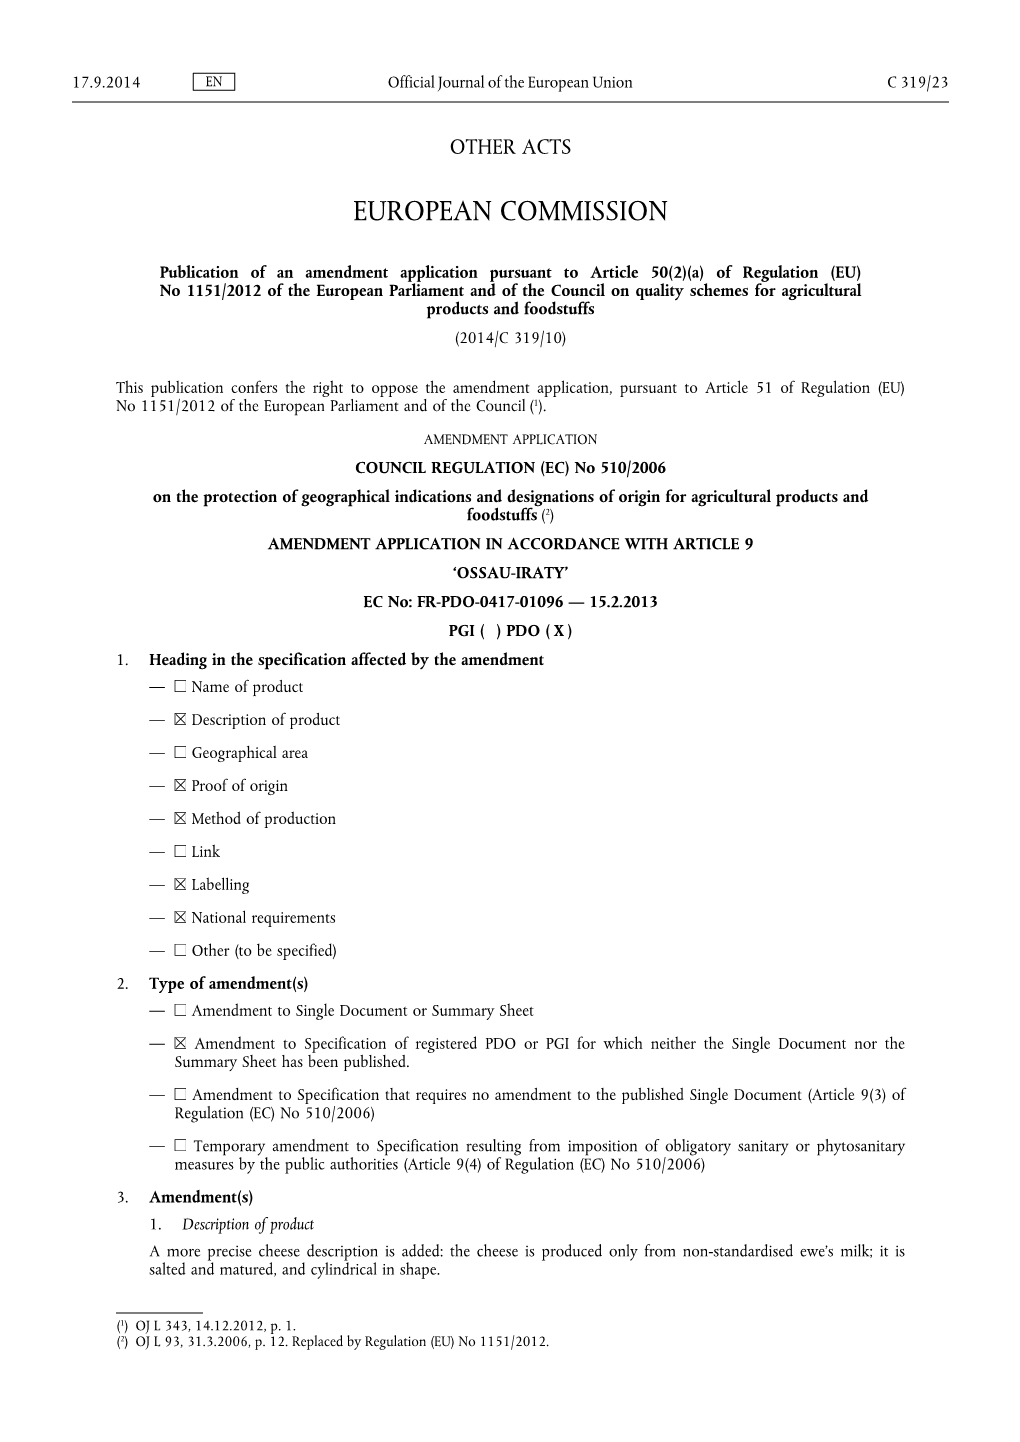 Publication of an Amendment Application Pursuant To